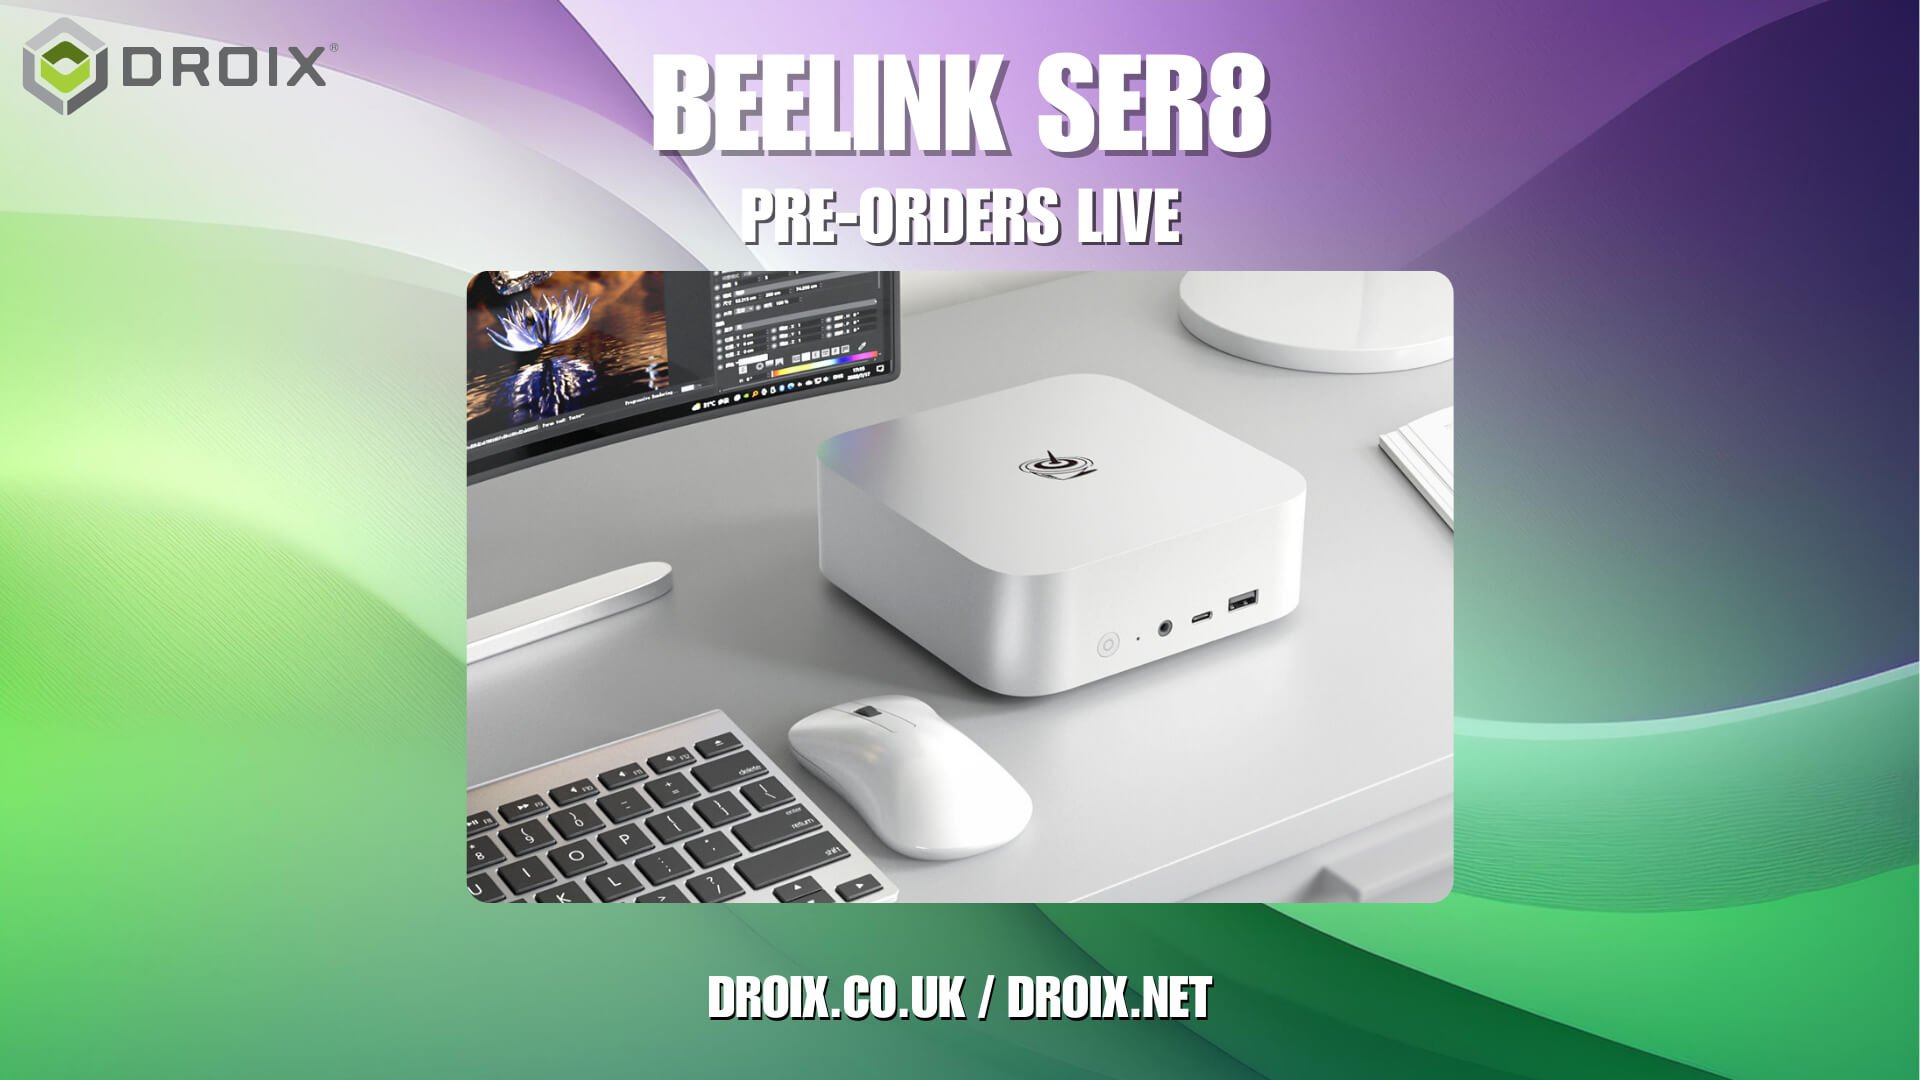 Pre-Order the Beelink SER8 Mini PC Today!